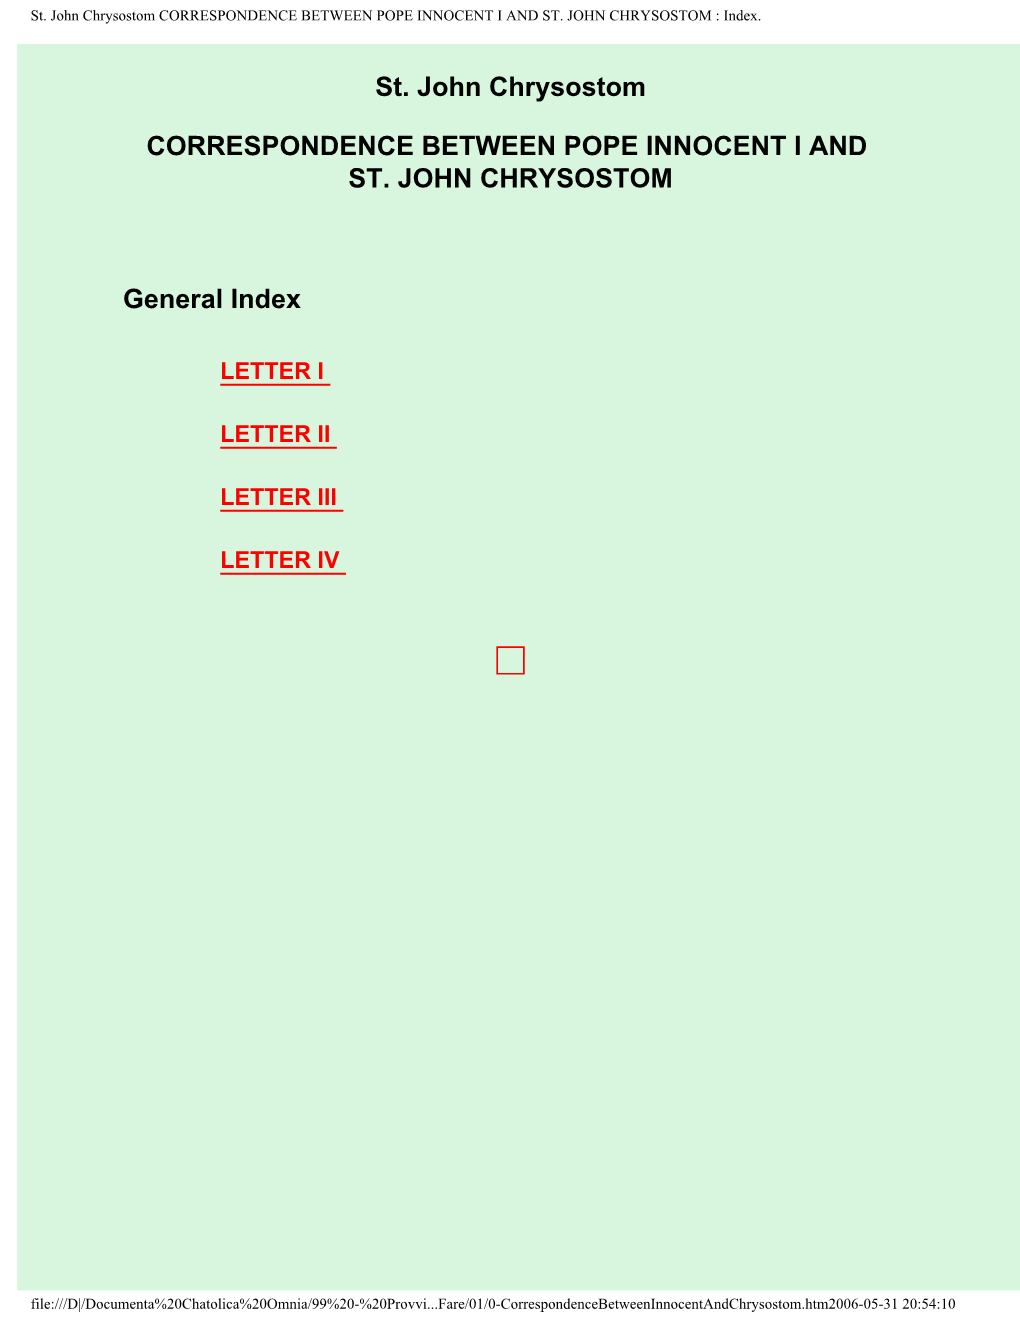 St. John Chrysostom CORRESPONDENCE BETWEEN POPE INNOCENT I and ST. JOHN CHRYSOSTOM : Index